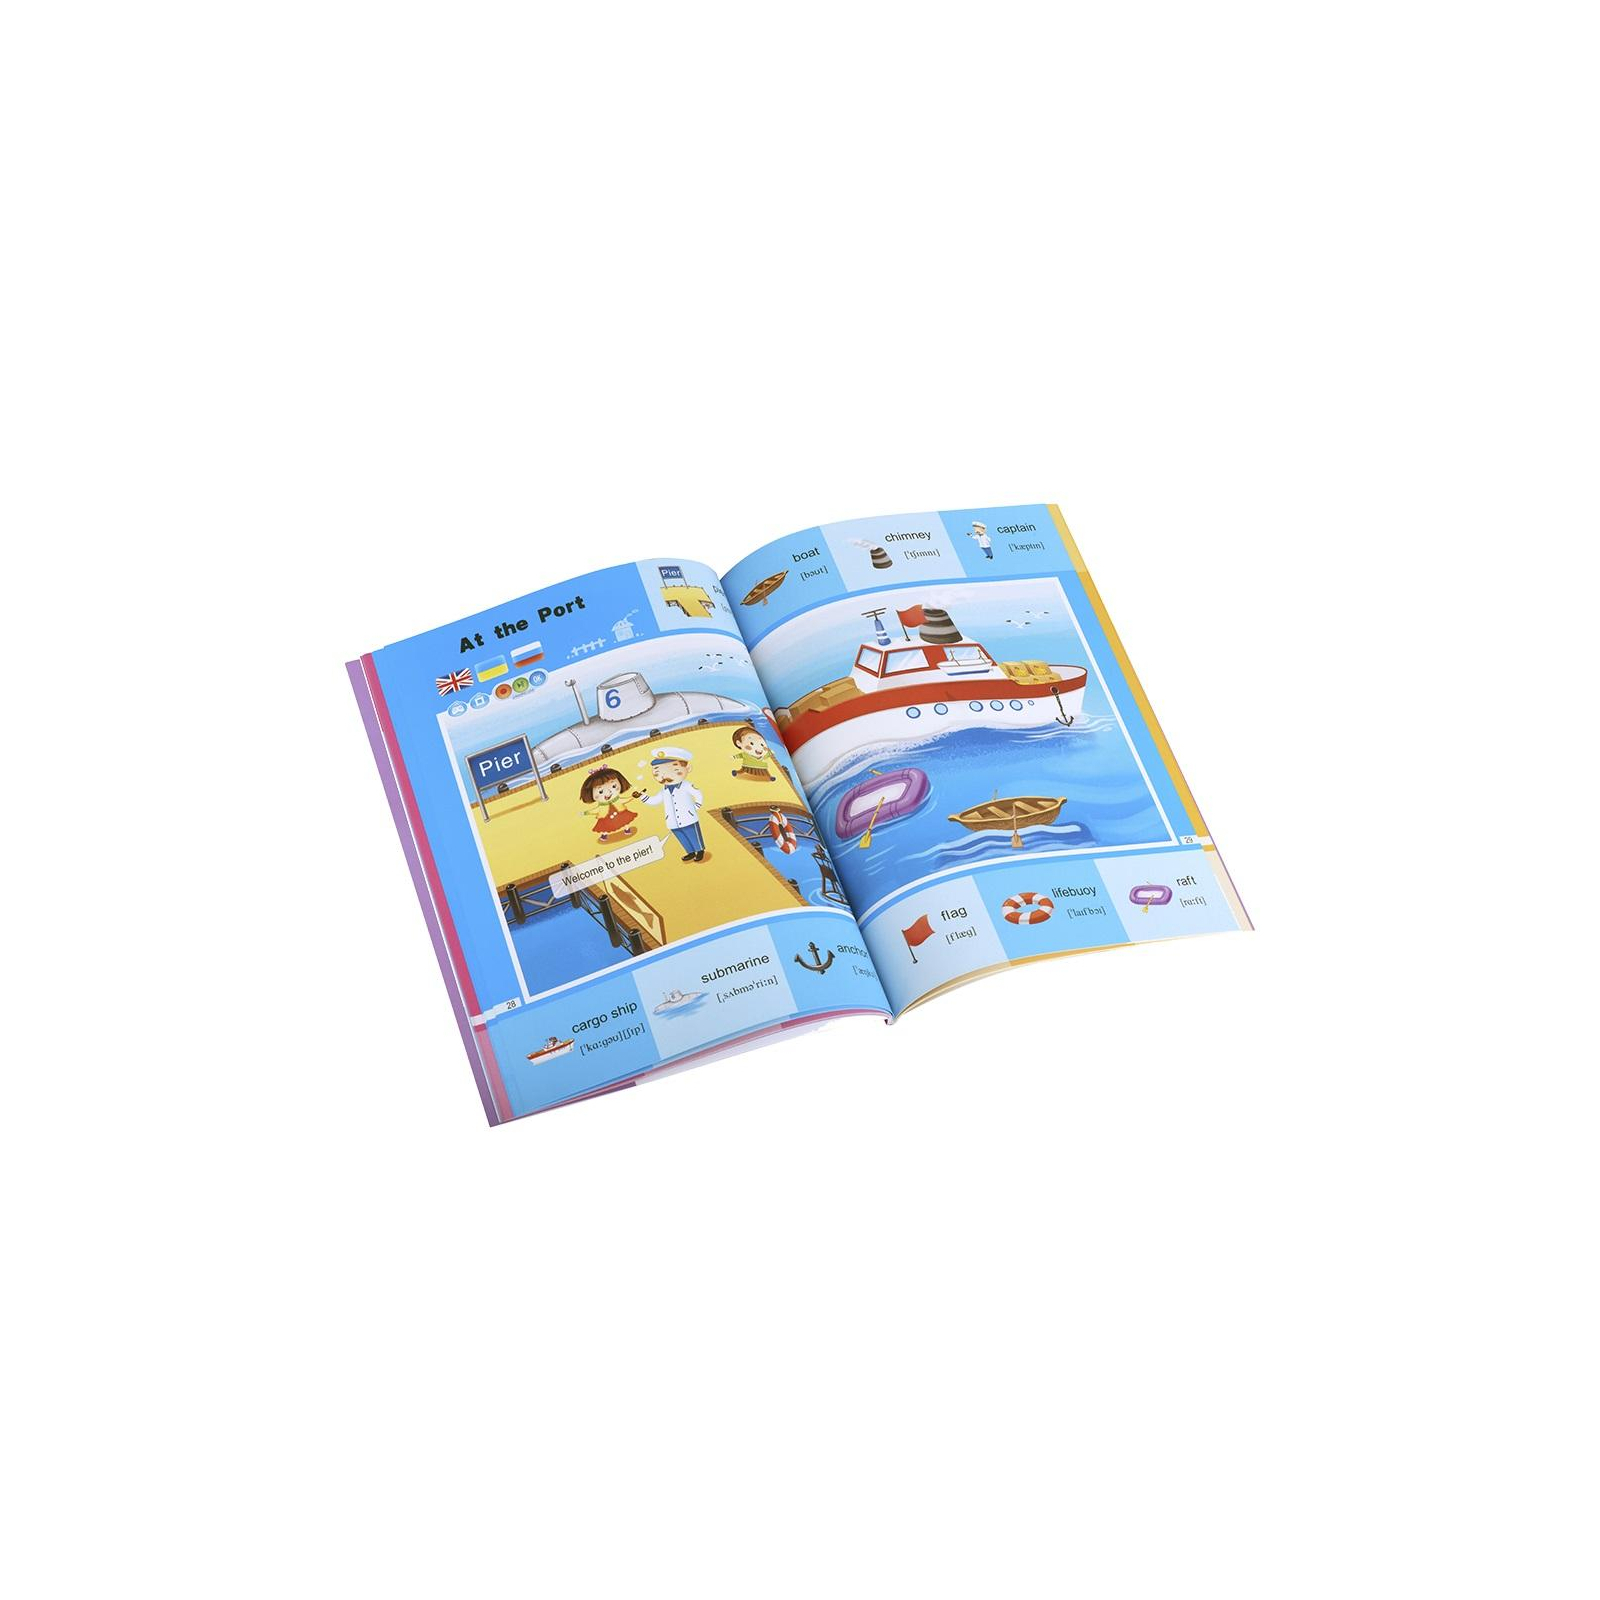 Интерактивная игрушка Smart Koala Книга Smart Koala 200 Basic English Words (Season 2) №2 (SKB200BWS2) изображение 2